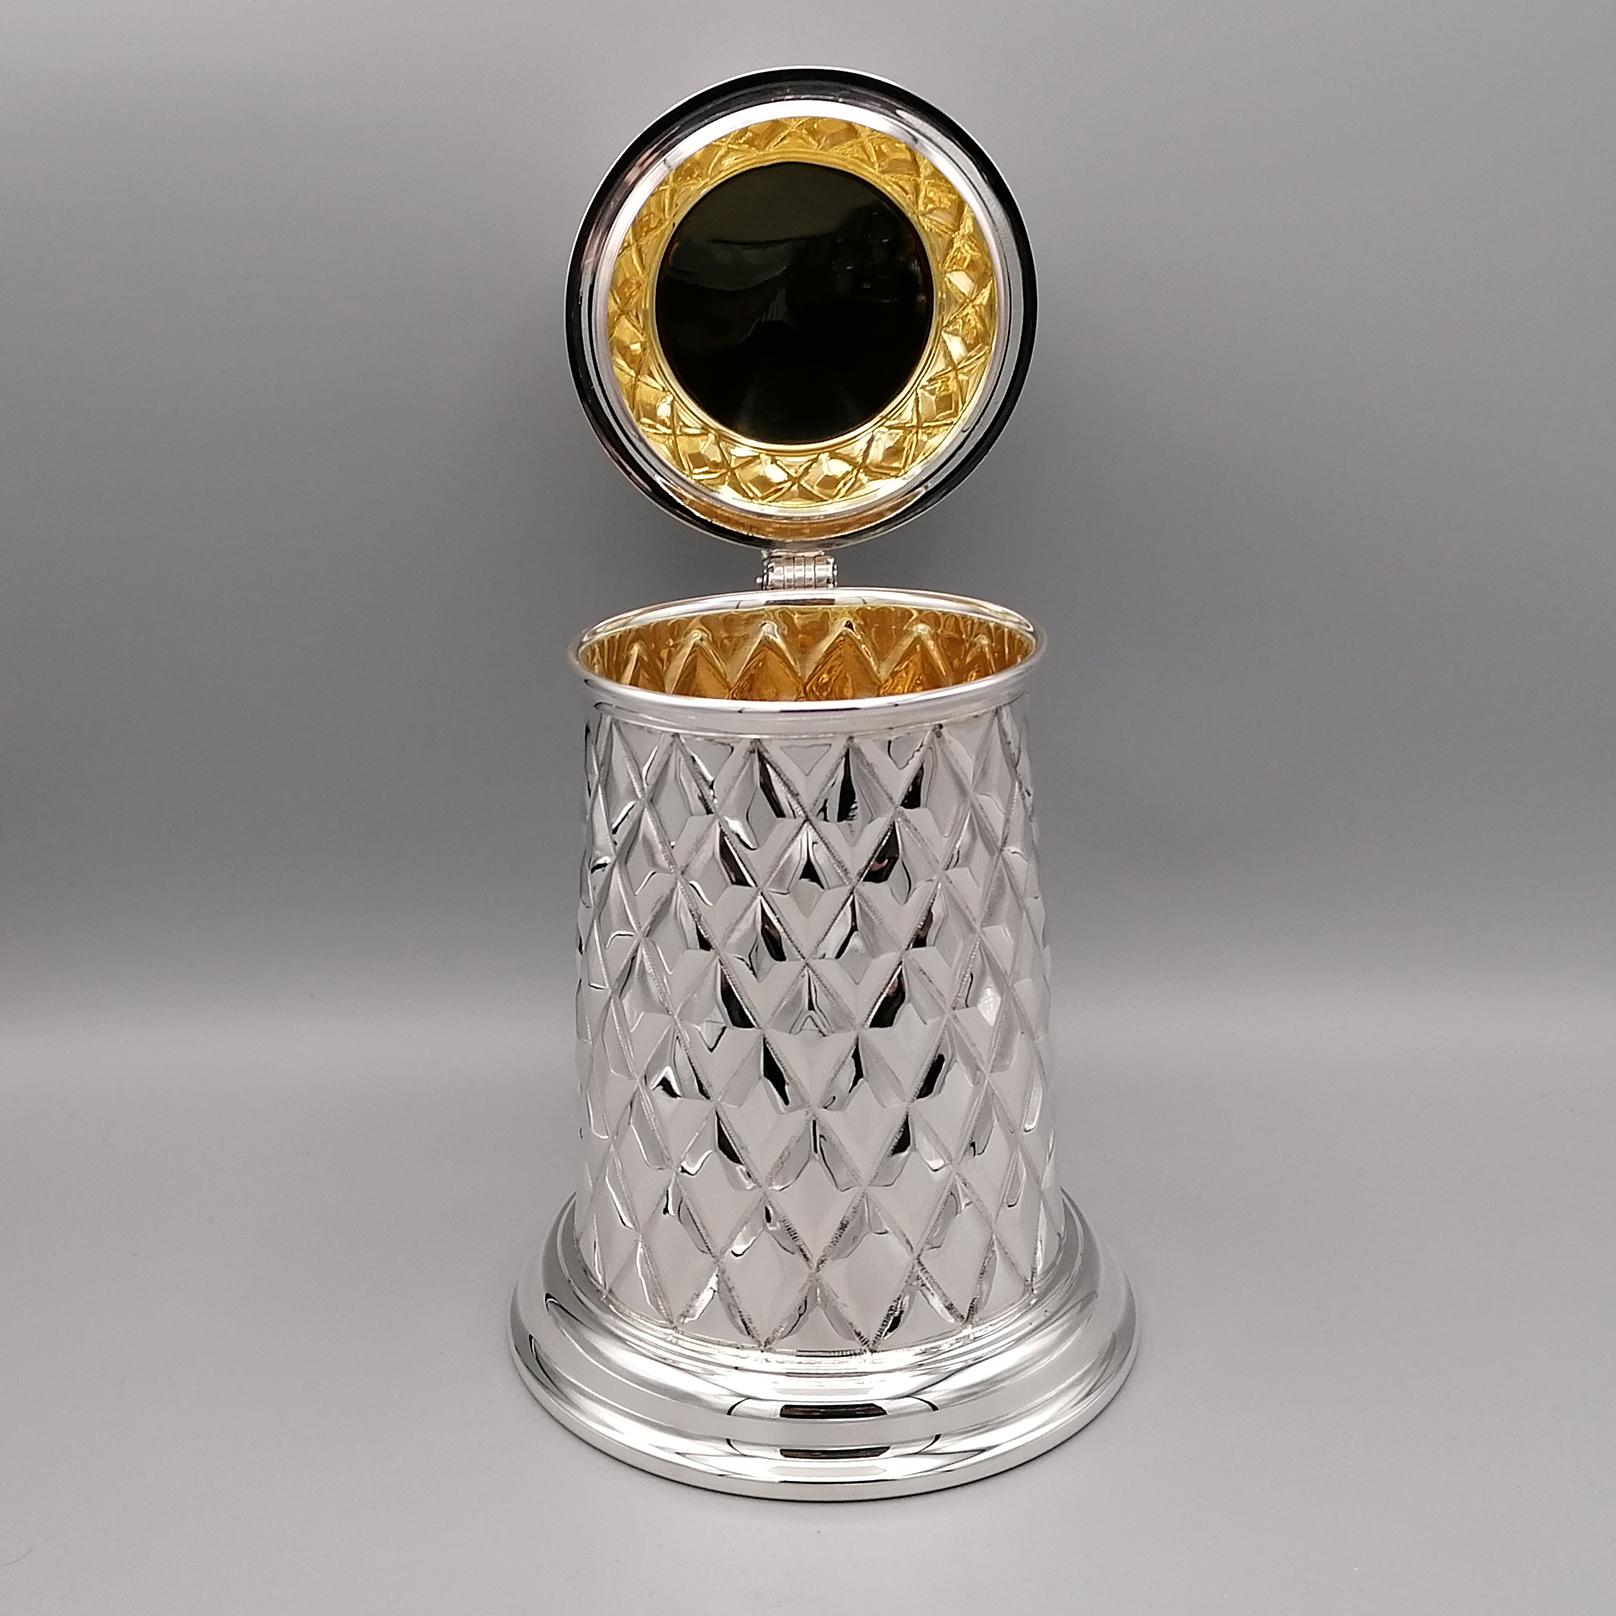 20th Century Italian Silver Tarkard, worked as Italian artisan tradition For Sale 4